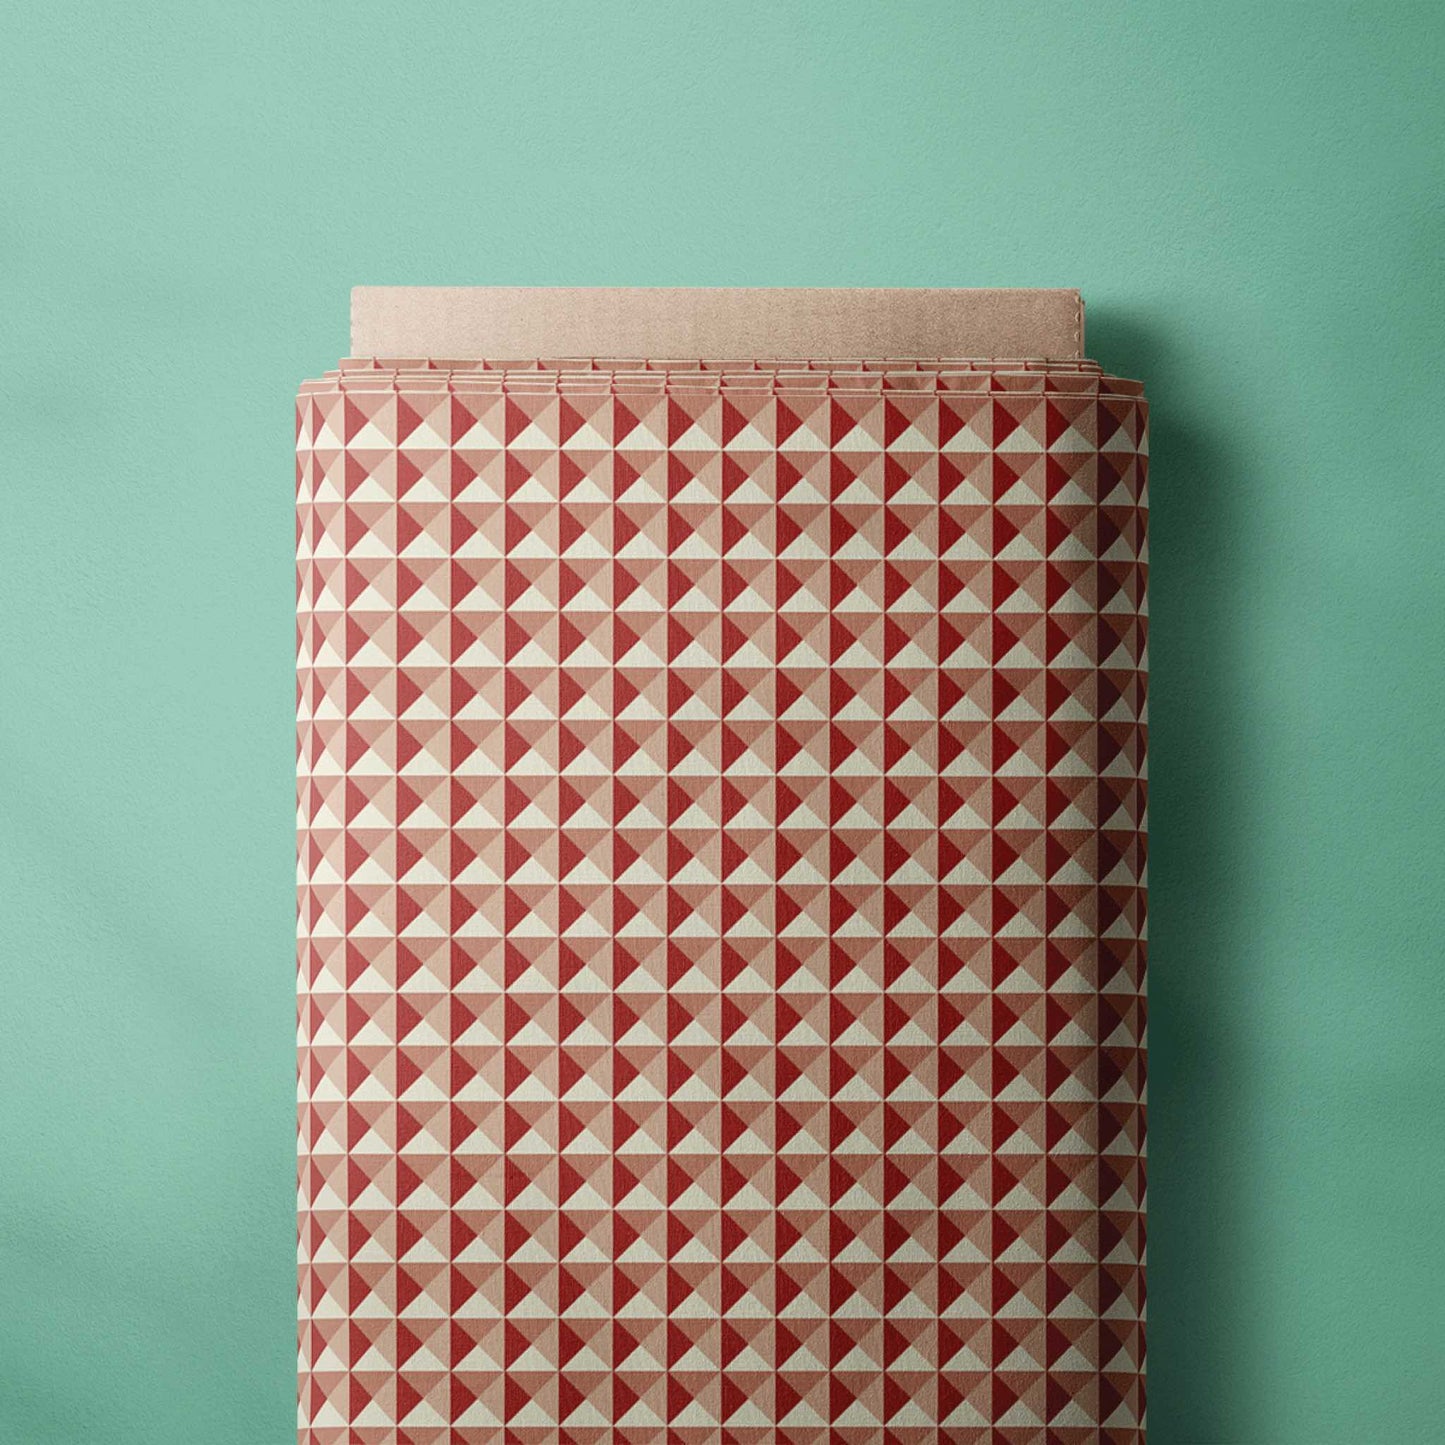 DIY Birthday Gift For Men: Cotton Poplin Fabric in 3D Check Red for men